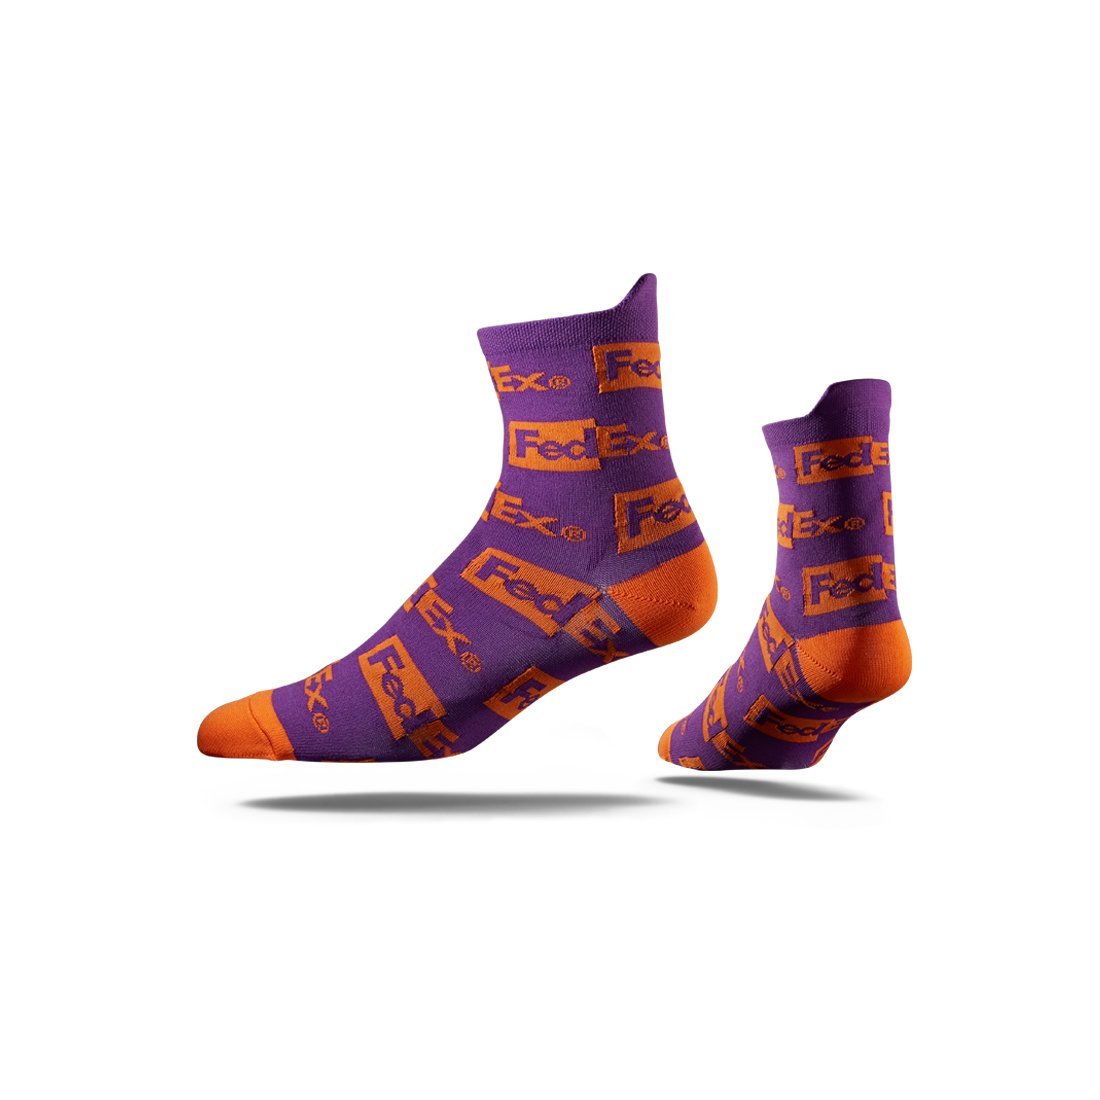 customizable socks in canada